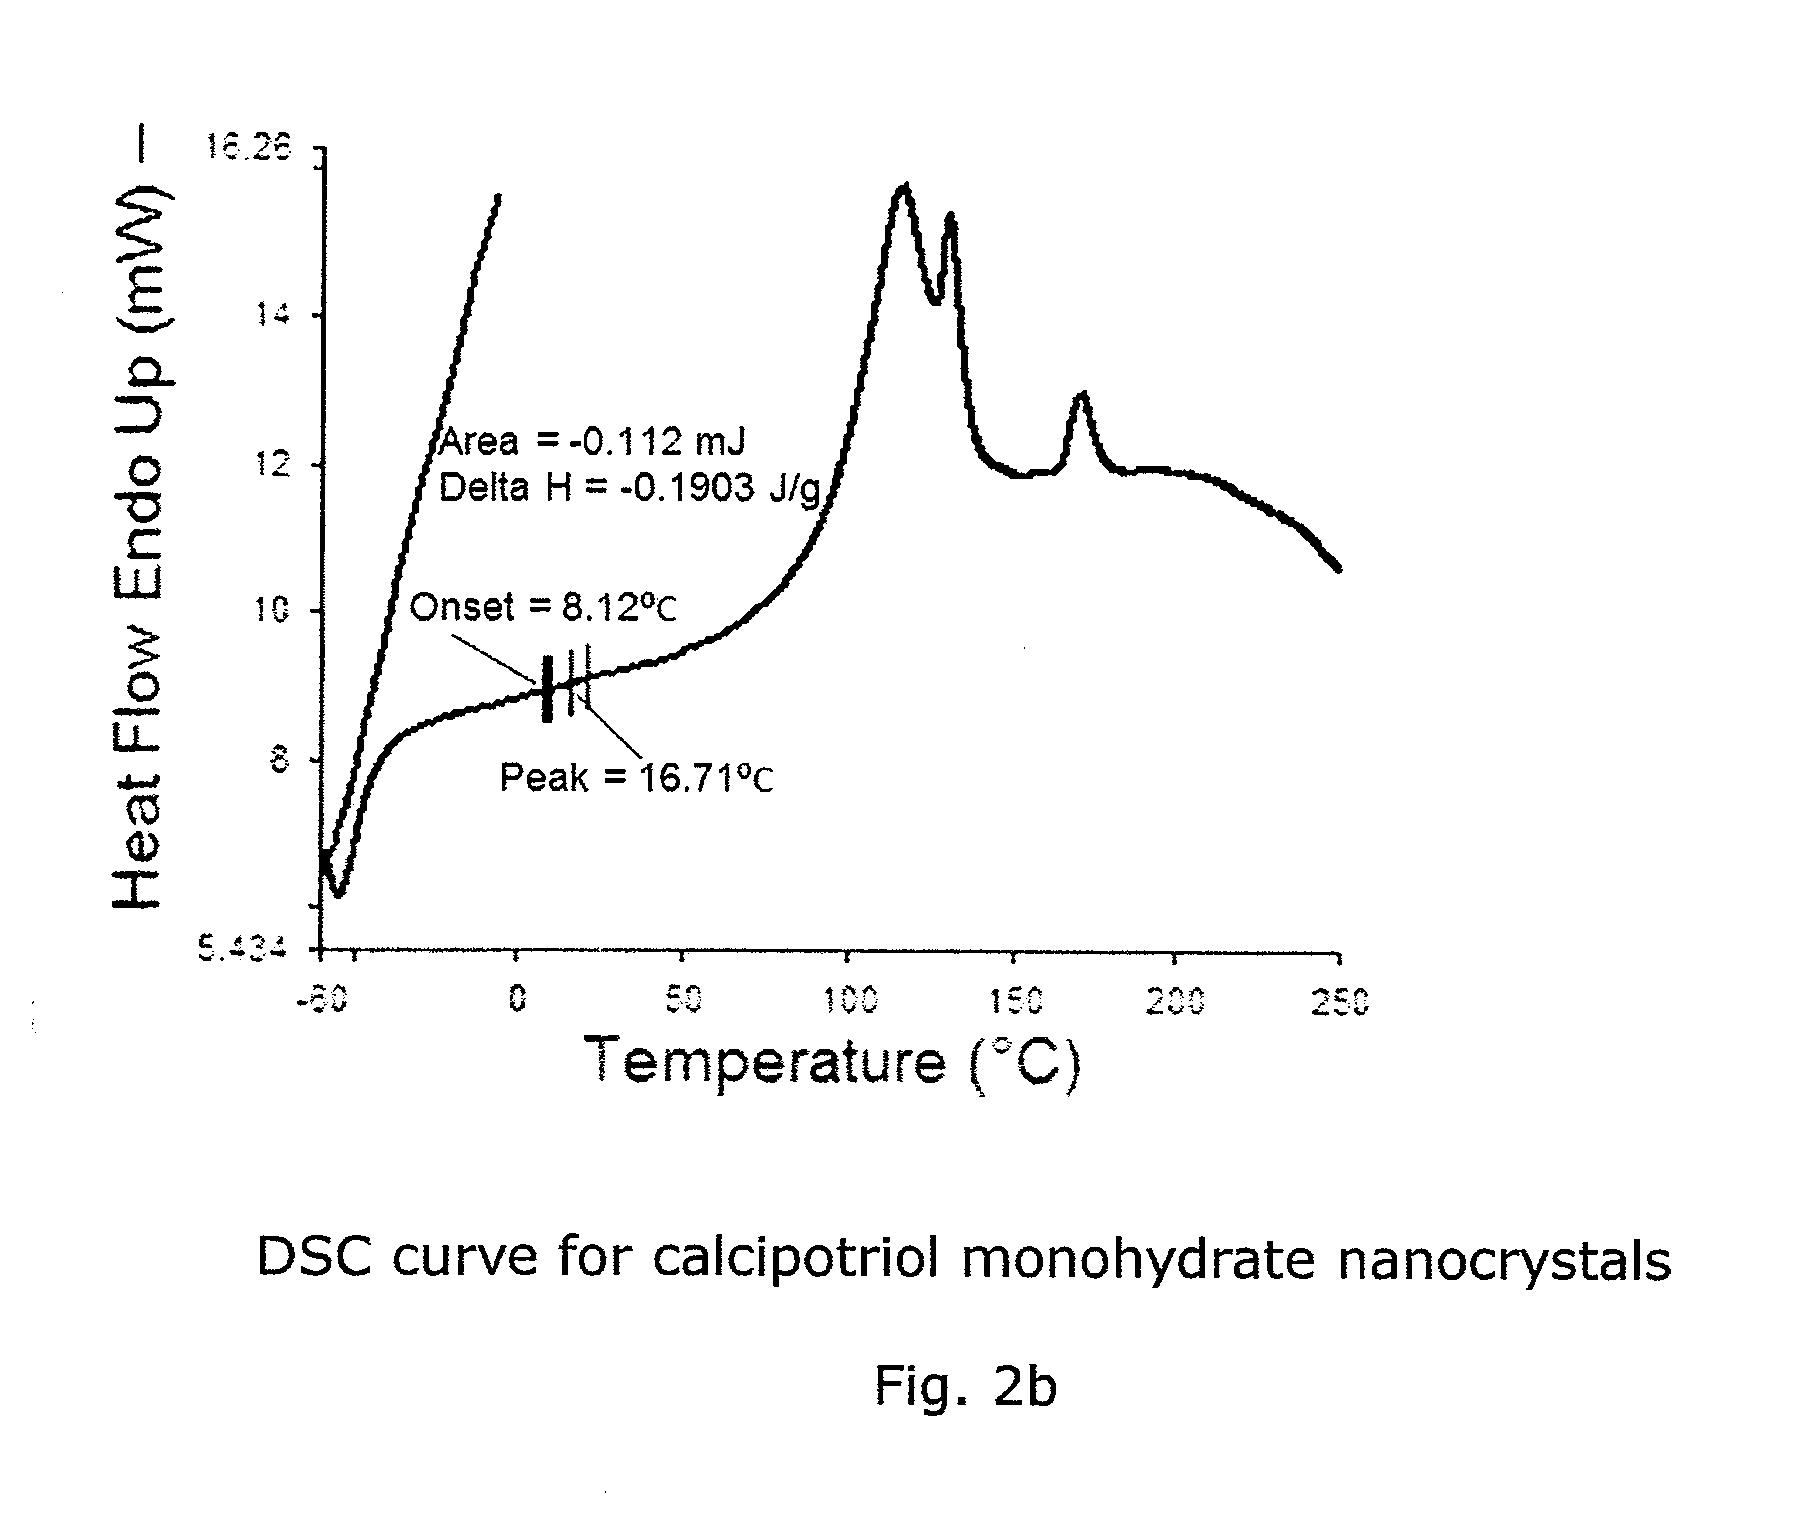 Calcipotriol monohydrate nanocrystals